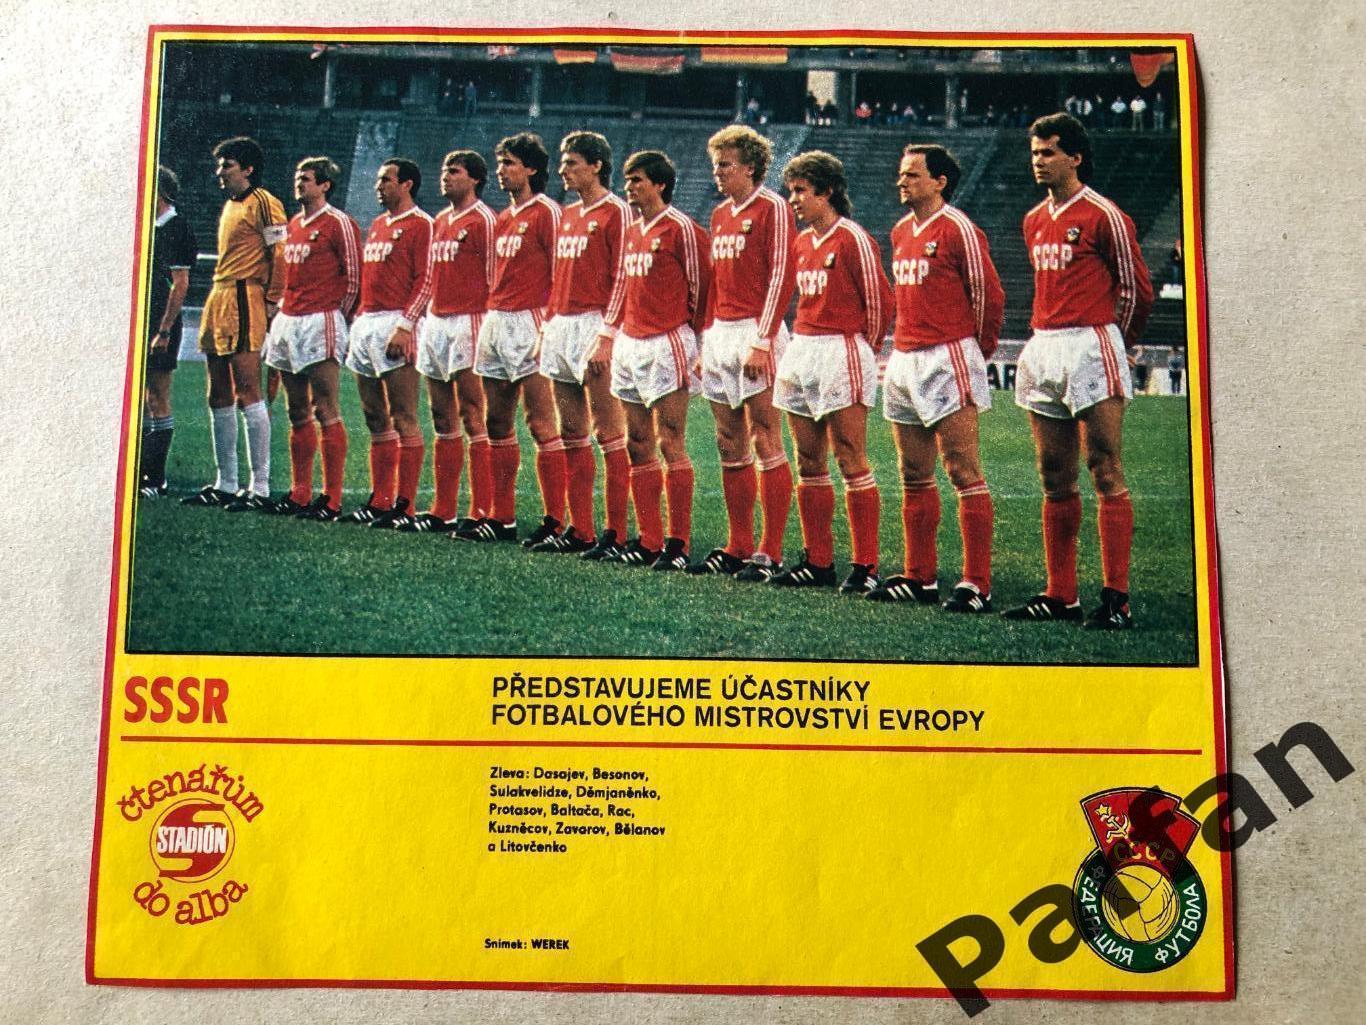 Stadion Постер СССР 1988